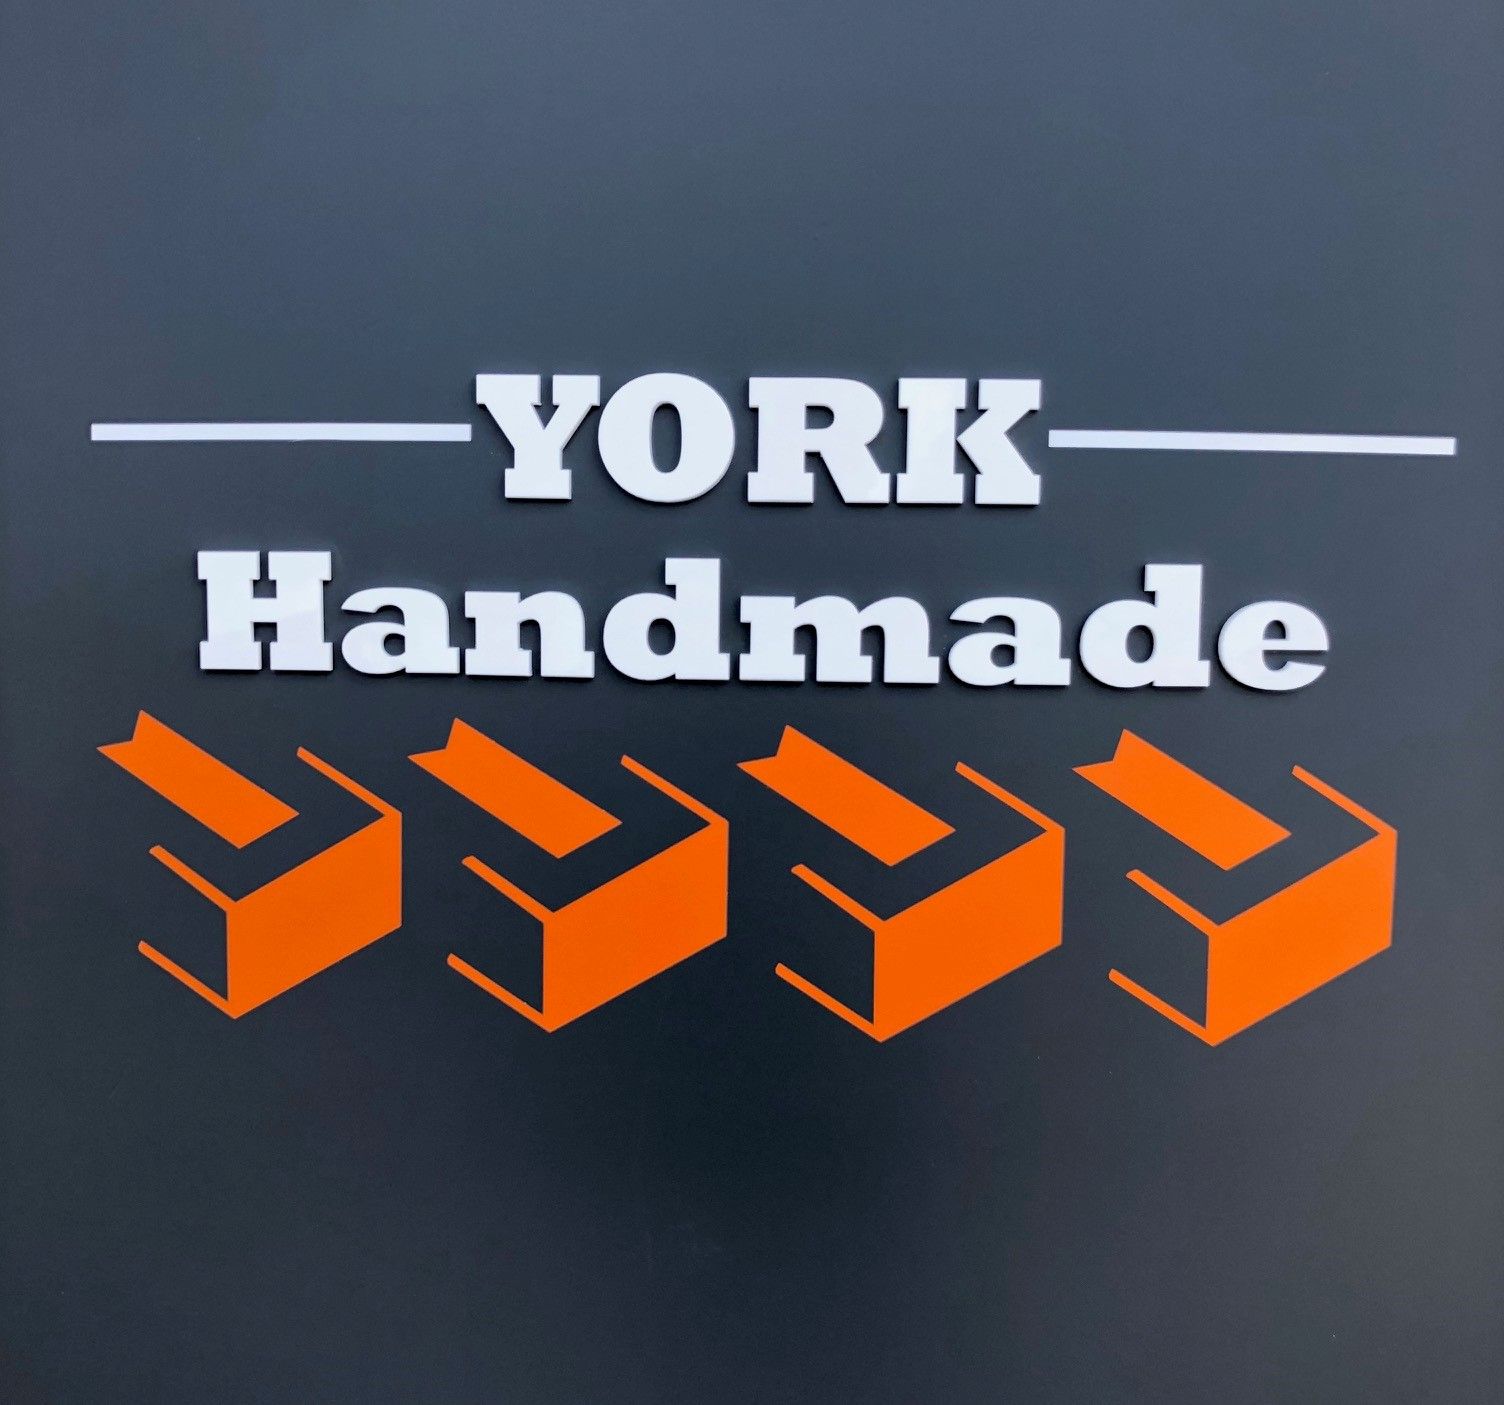 York handmade Brick